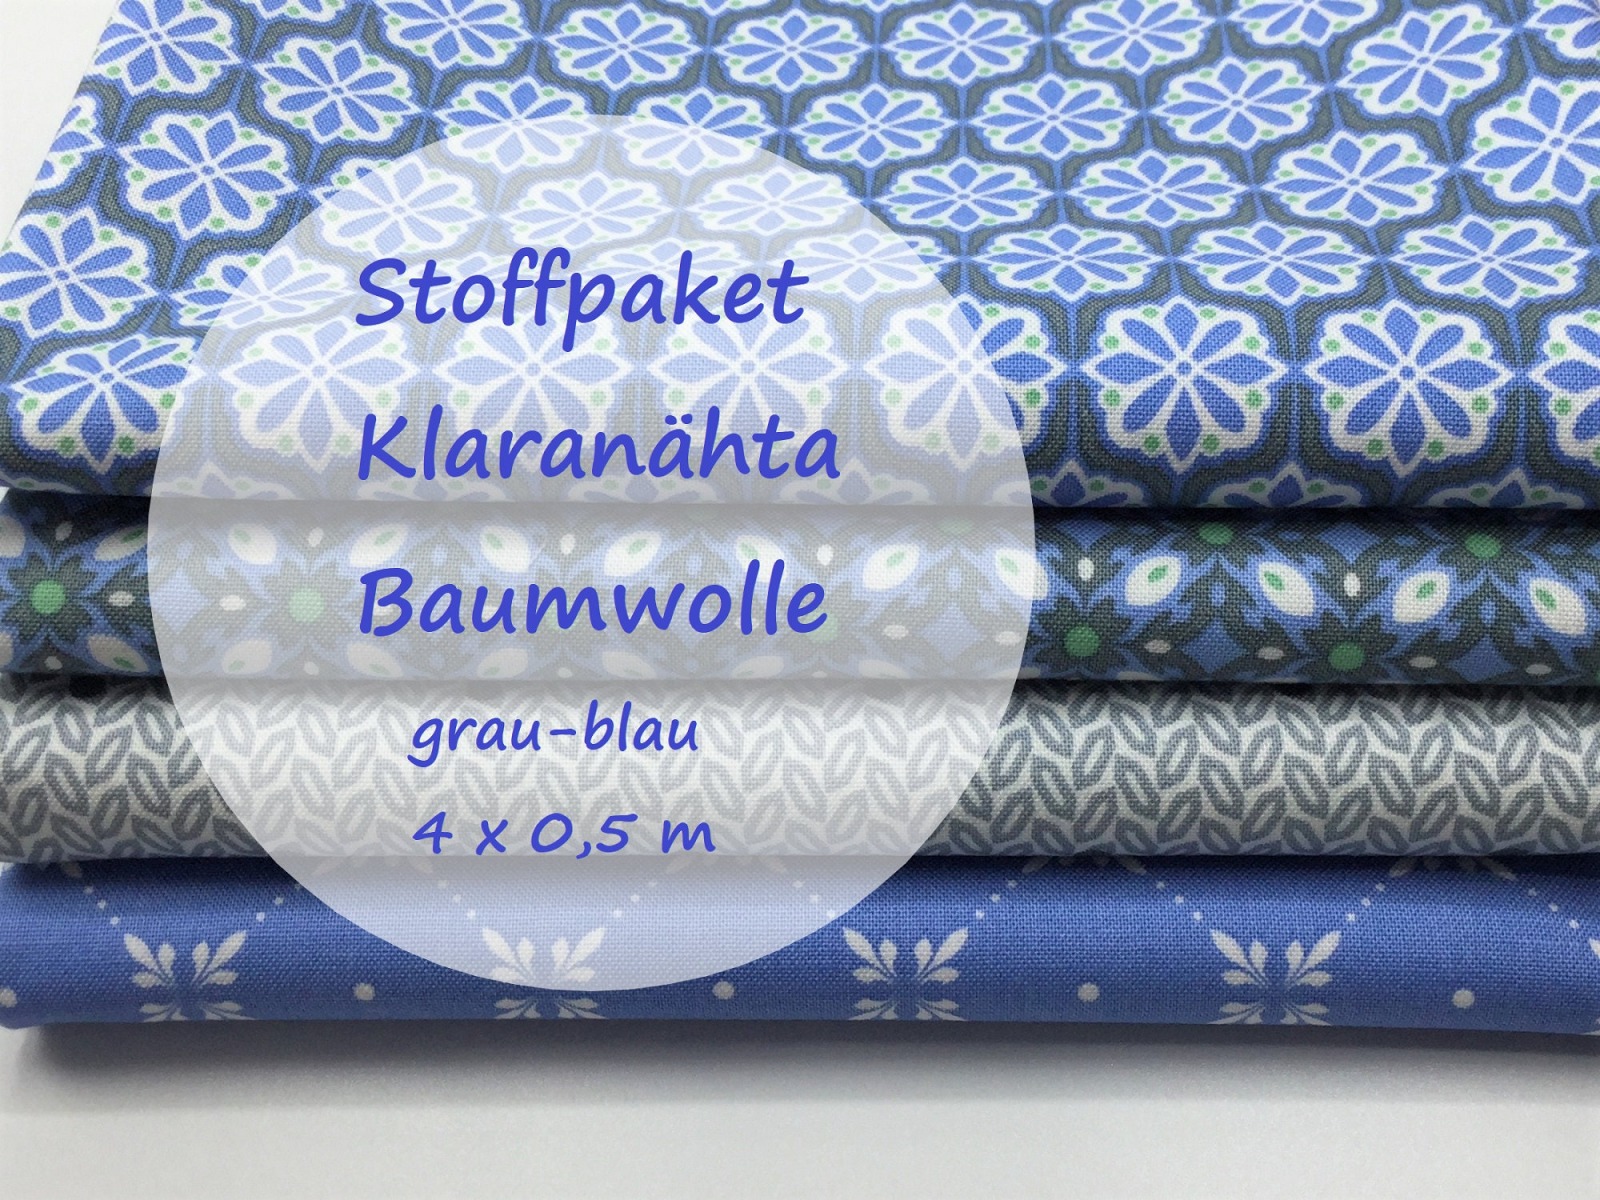 Stoffpaket Klaranähta Baumwollstoffe / blau / 4 x 0,5 m / Patchwork